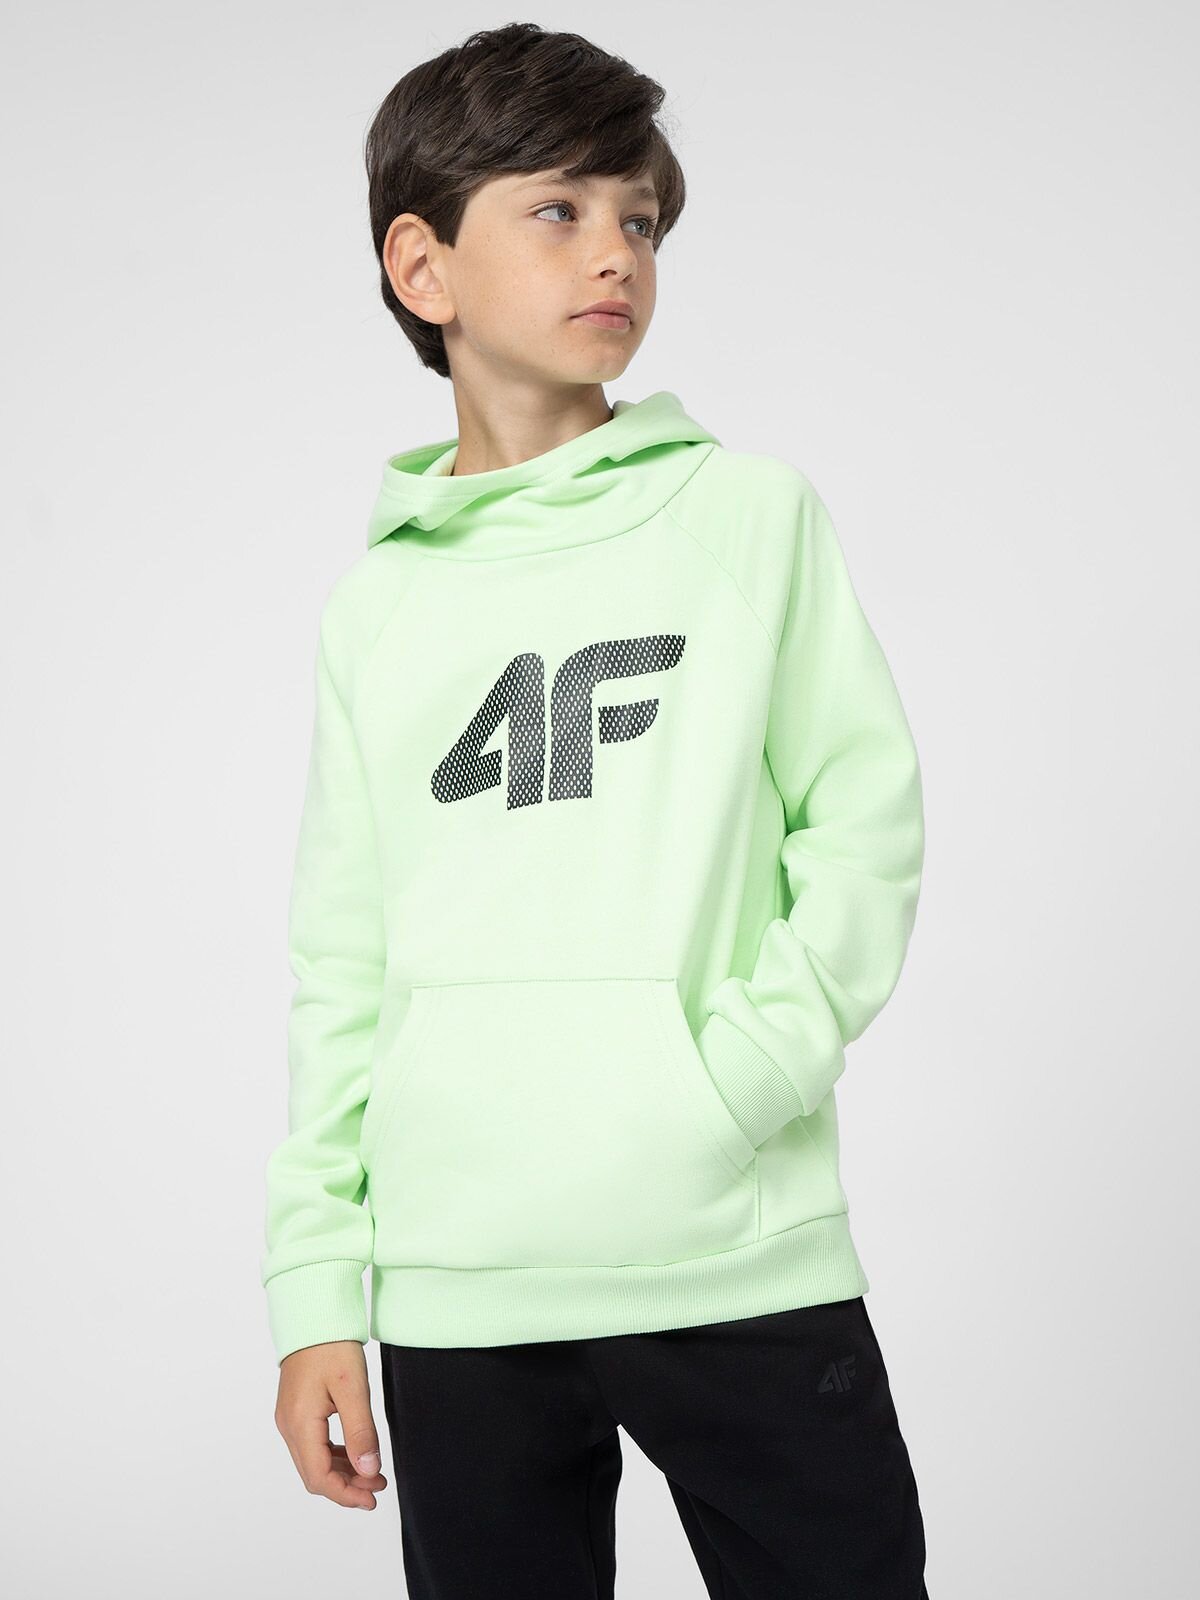 Boys' 4F Cotton Sweatshirt